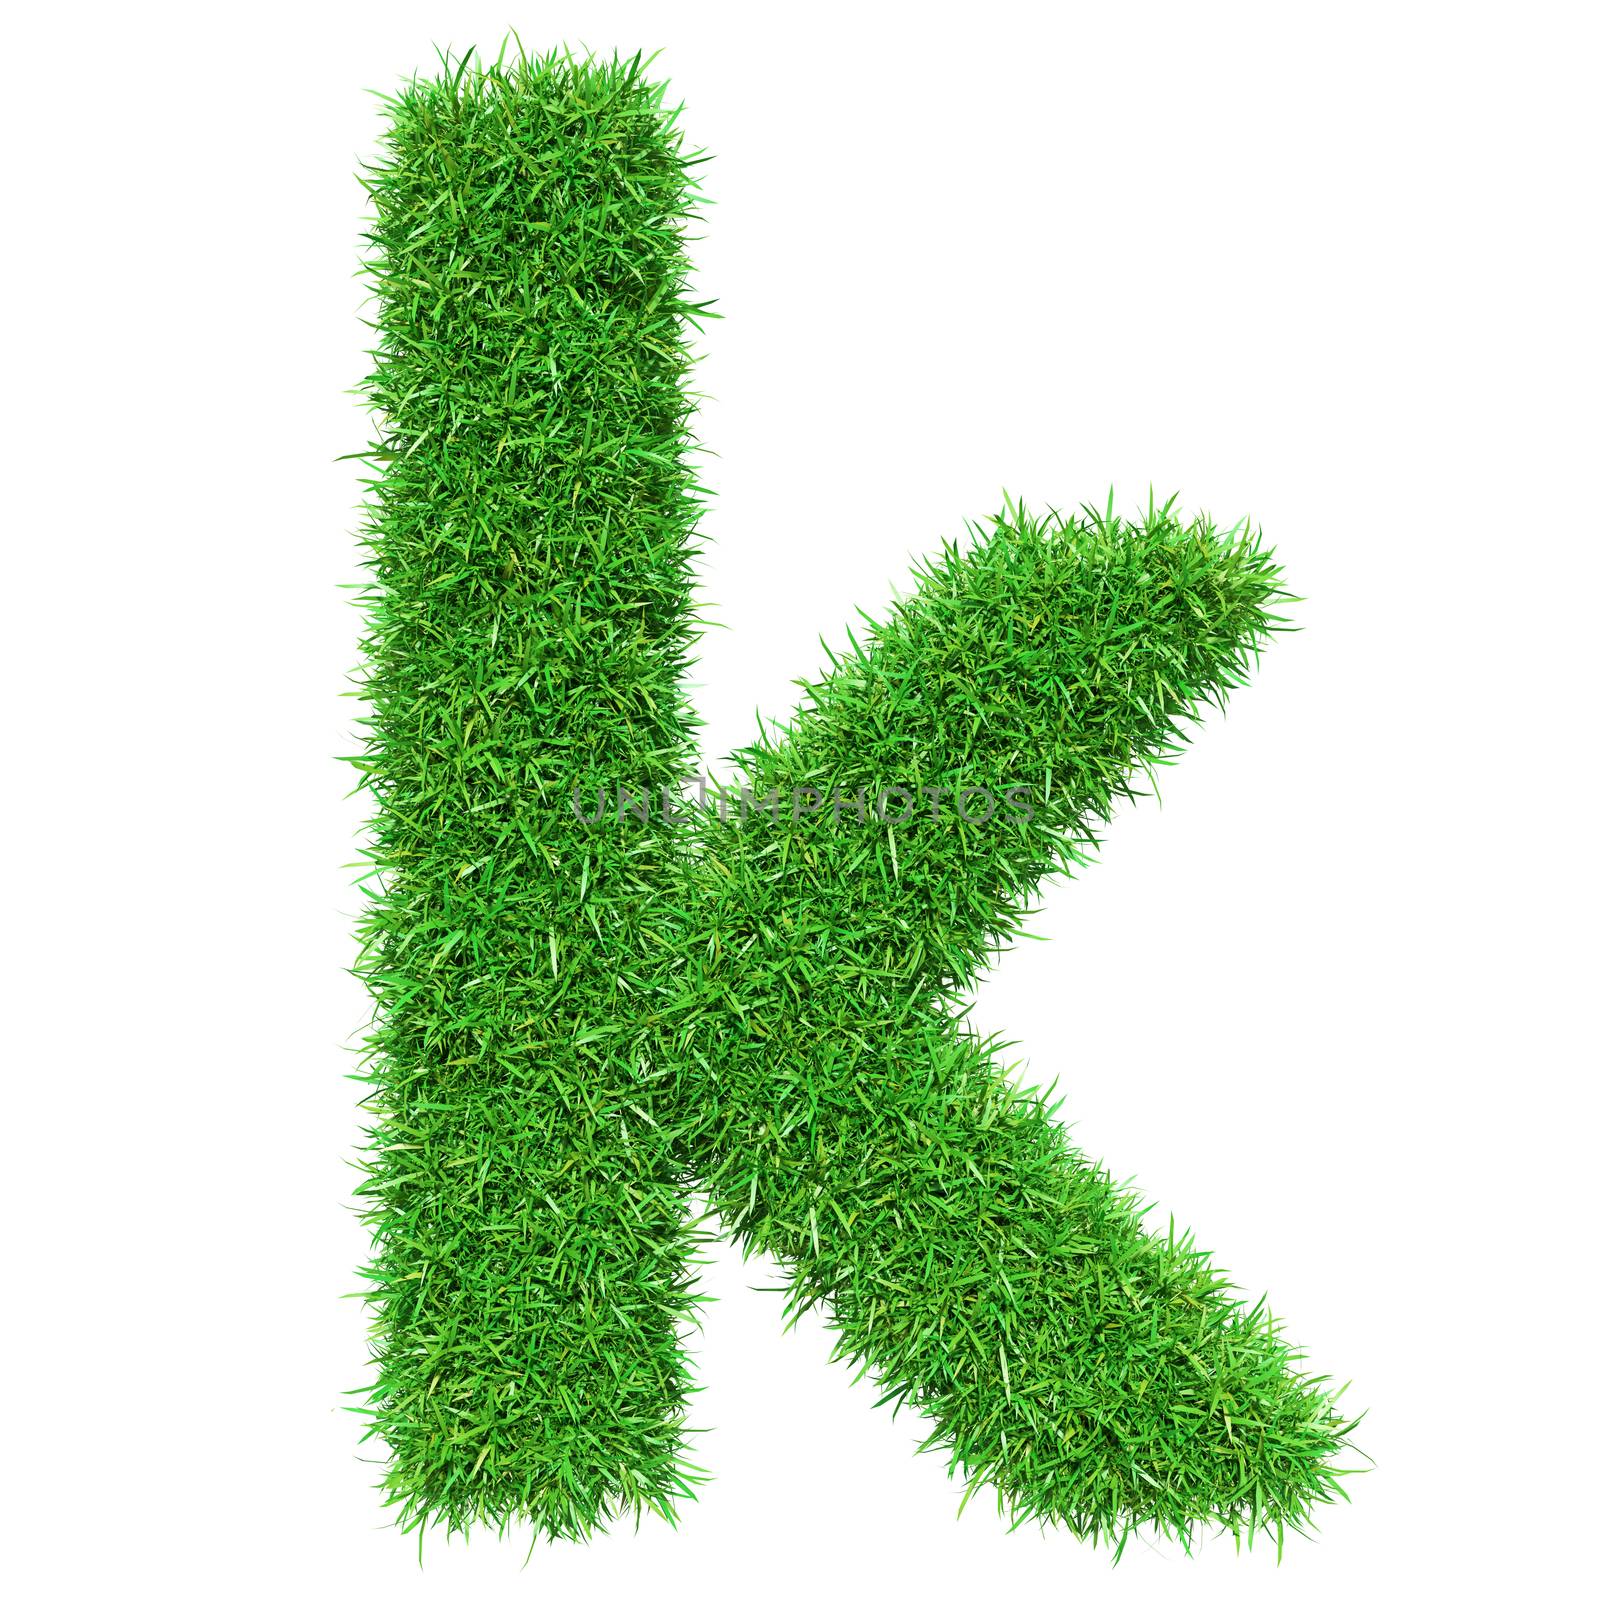 Green Grass Letter K. Isolated On White Background. Font For Your Design. 3D Illustration